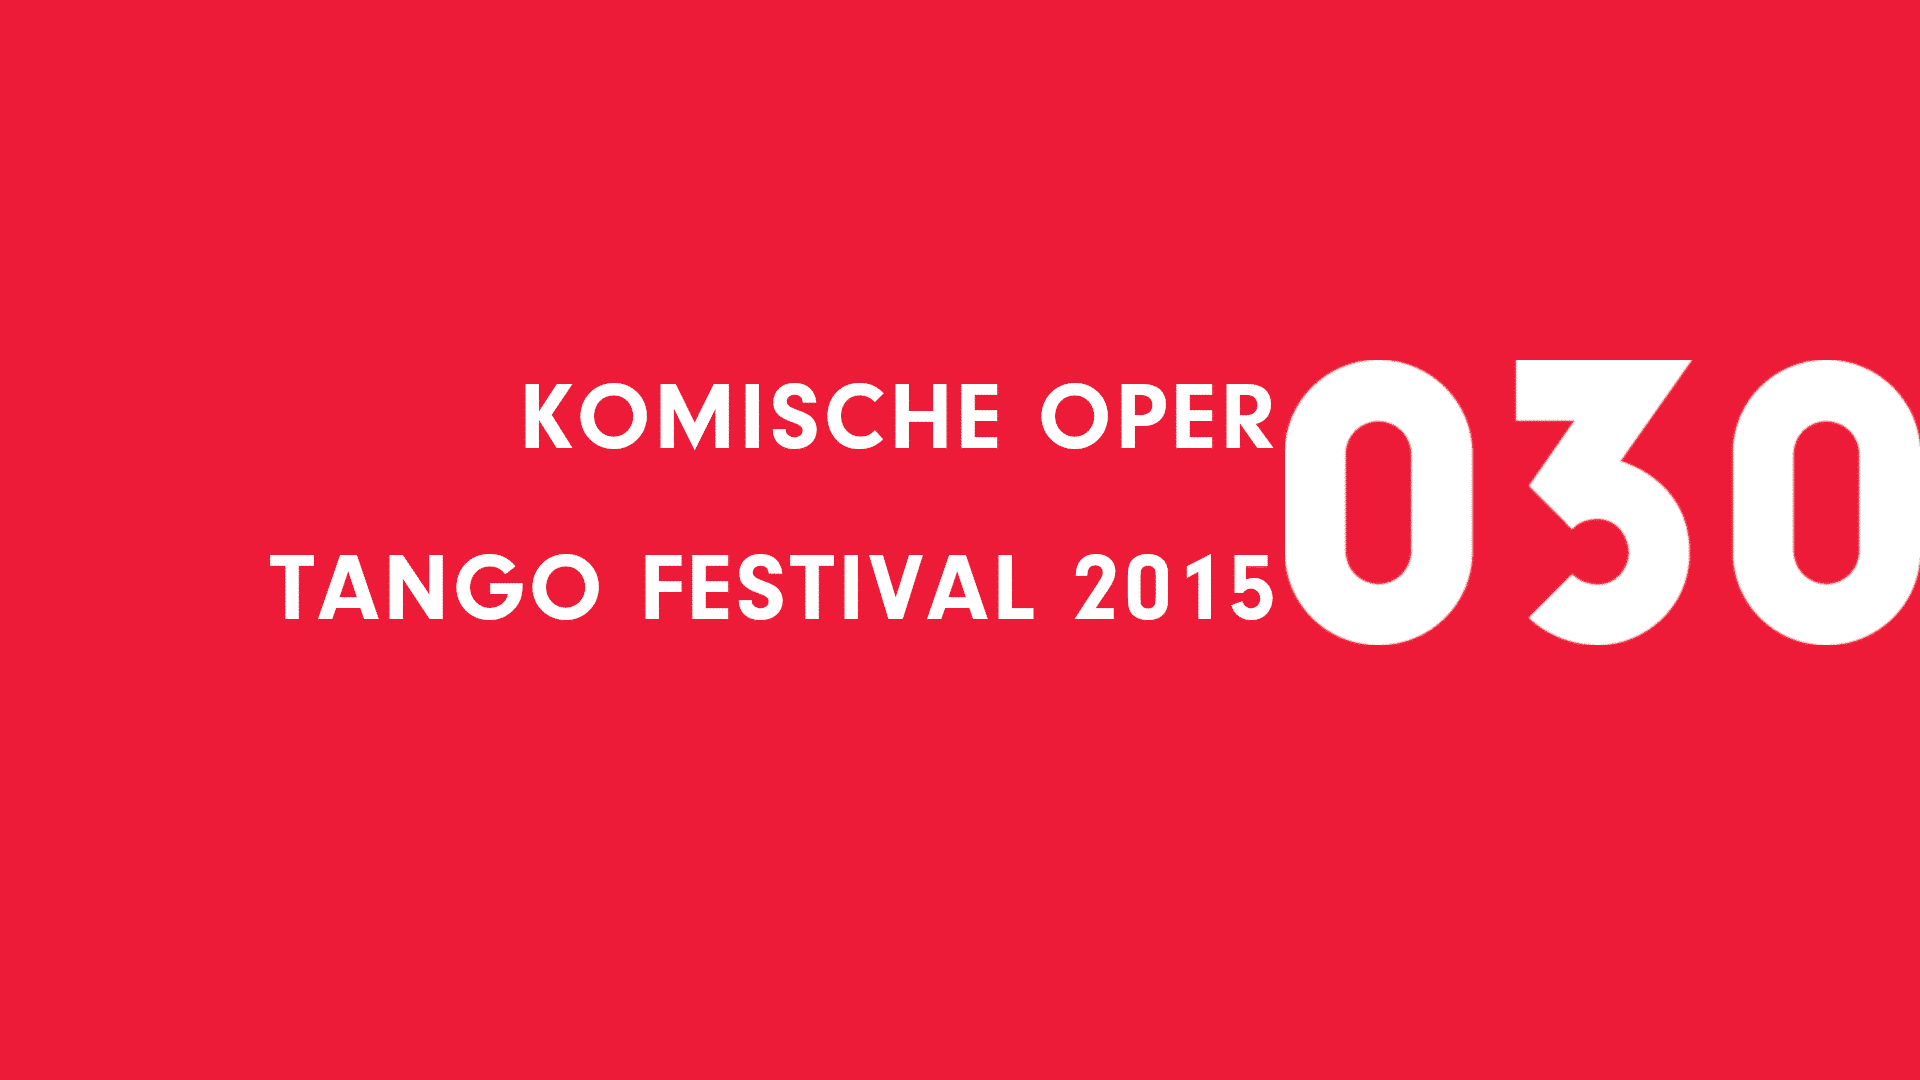 Komische Oper Tango Festival 2015 Preview Image